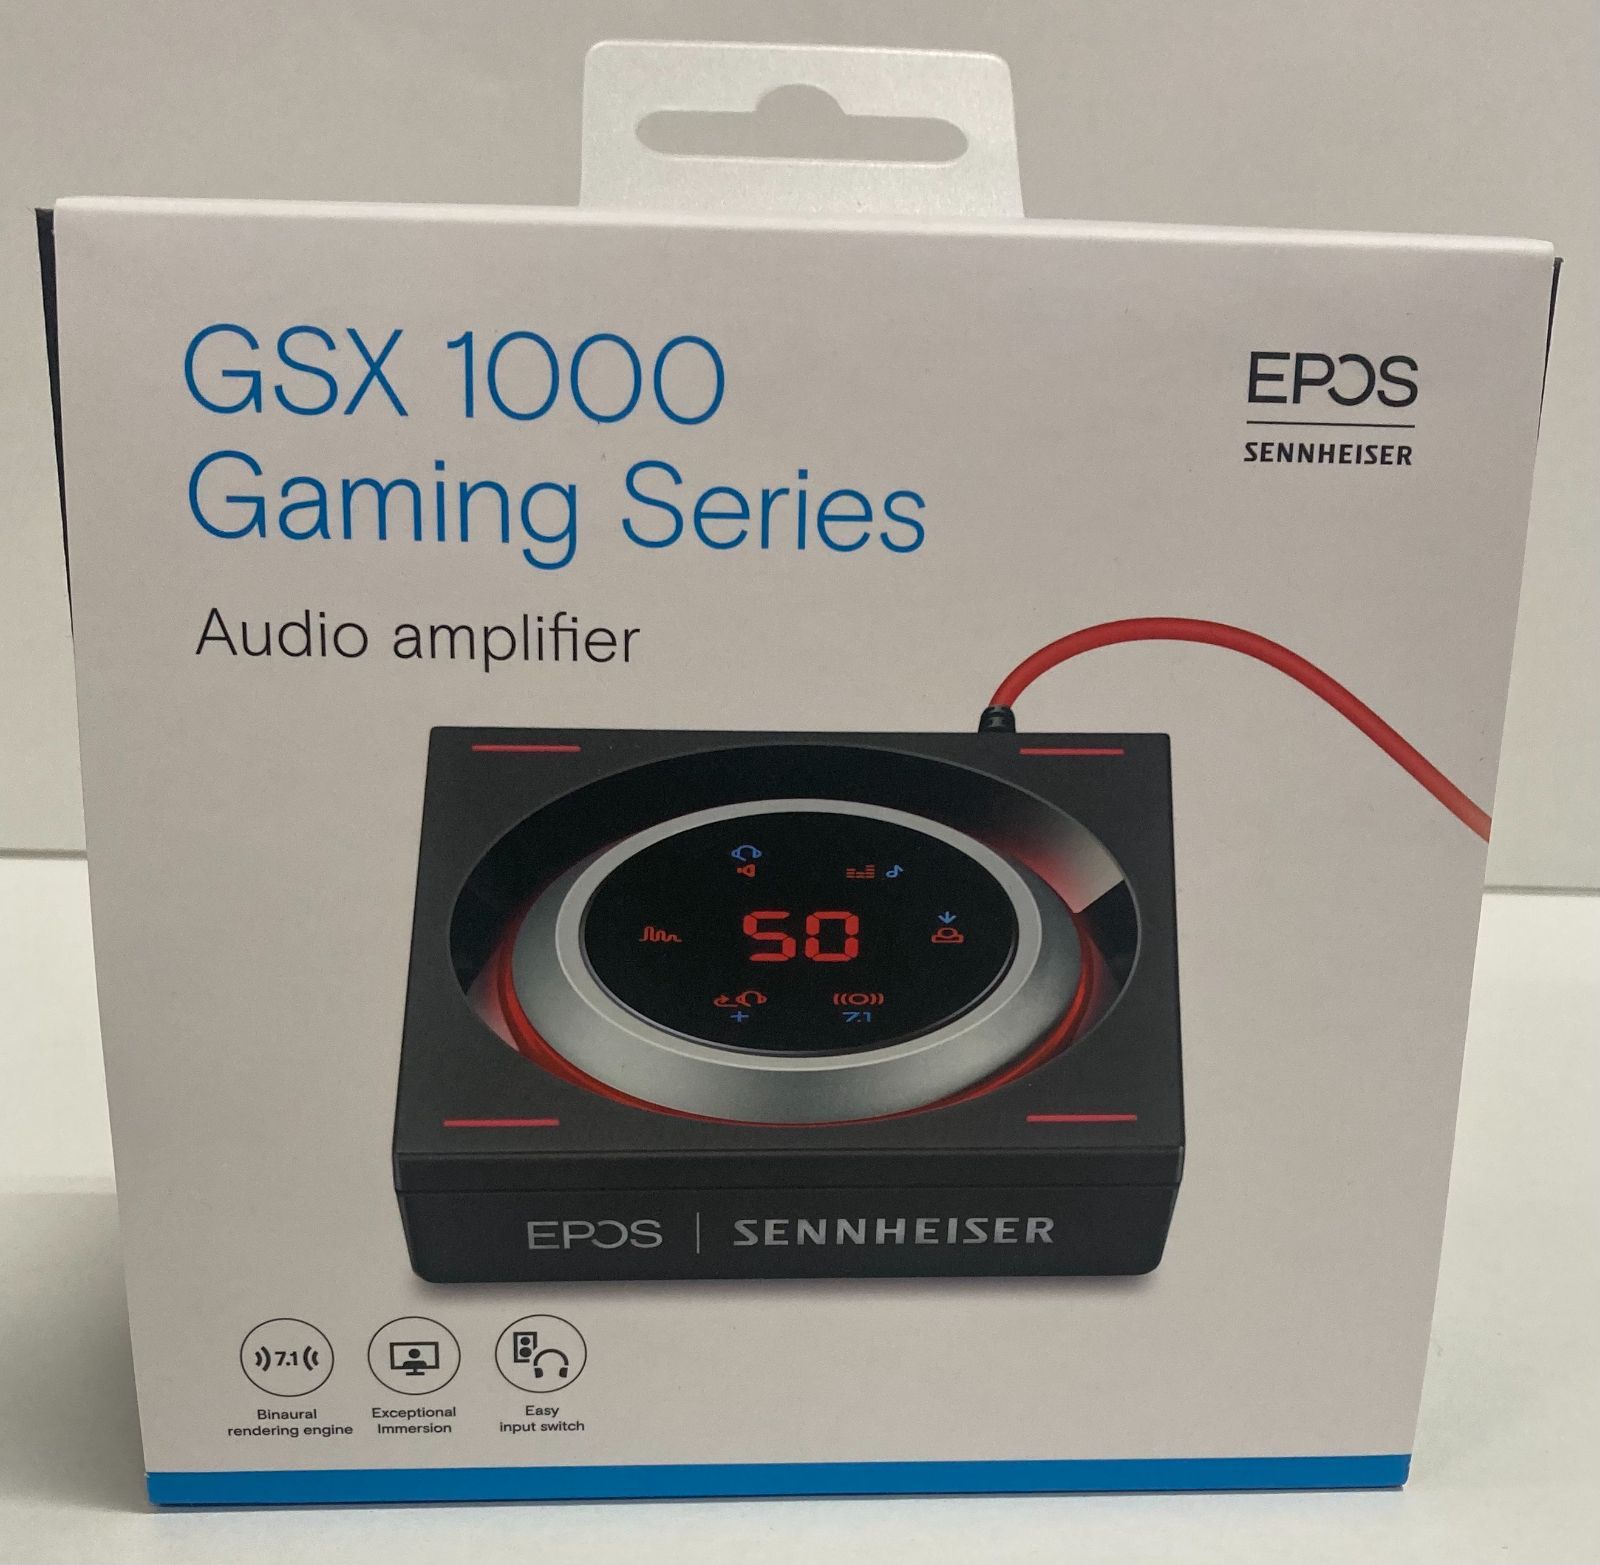 51. EPOS SENNHEISER GSX 1000 Gaming Series Audio amplifier